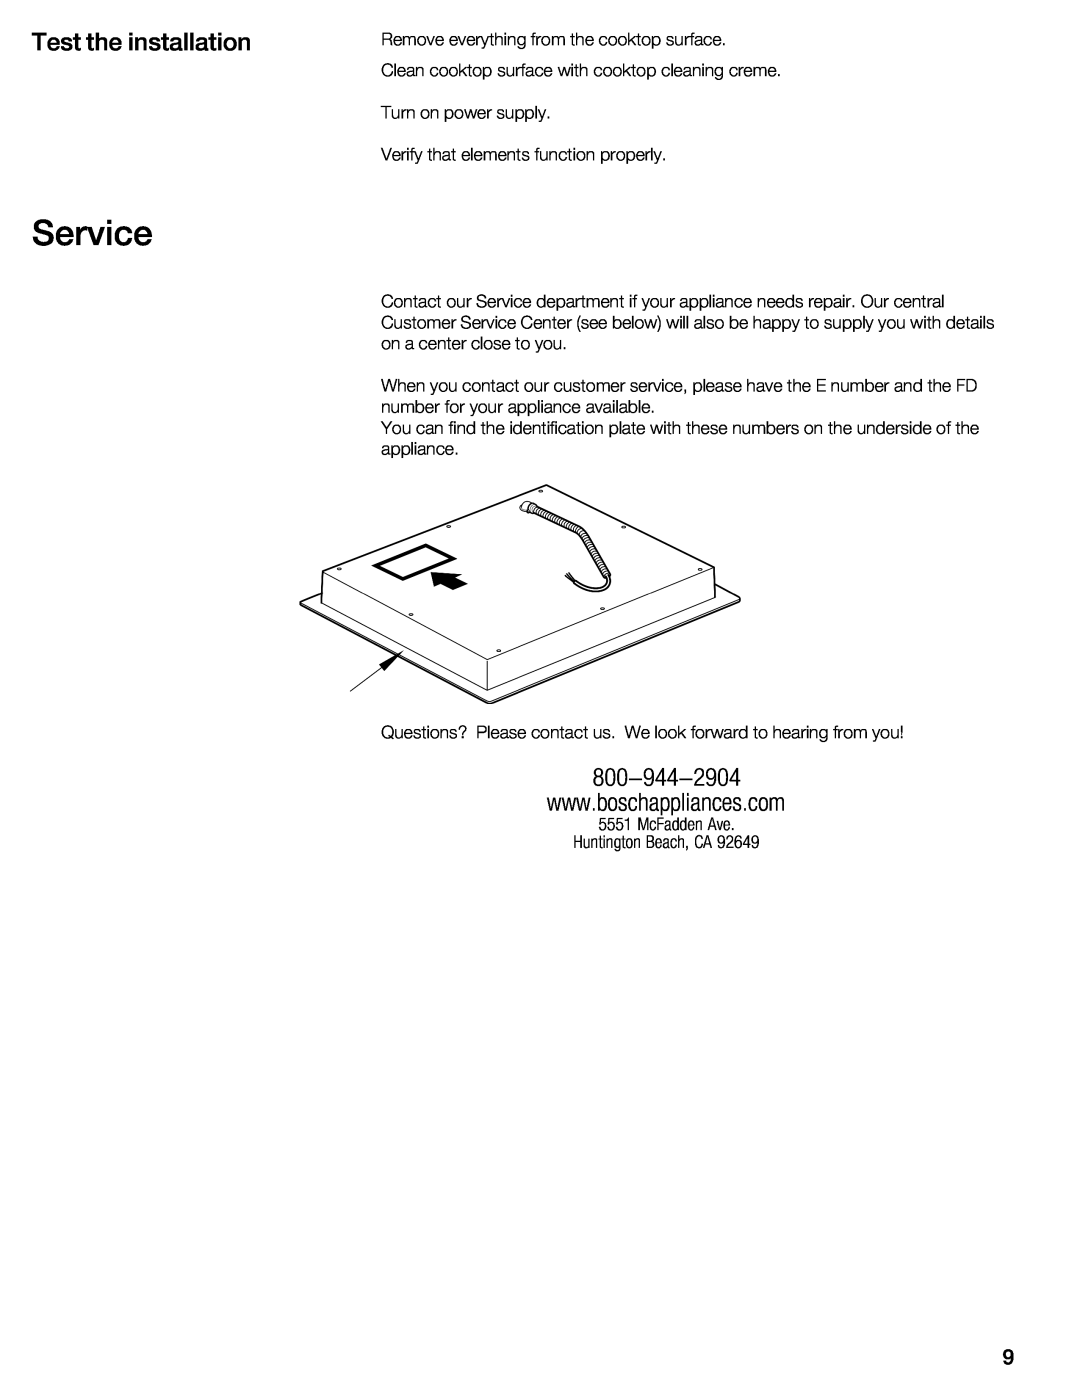 Bosch Appliances NIT8653UC manual Service, Test the installation 